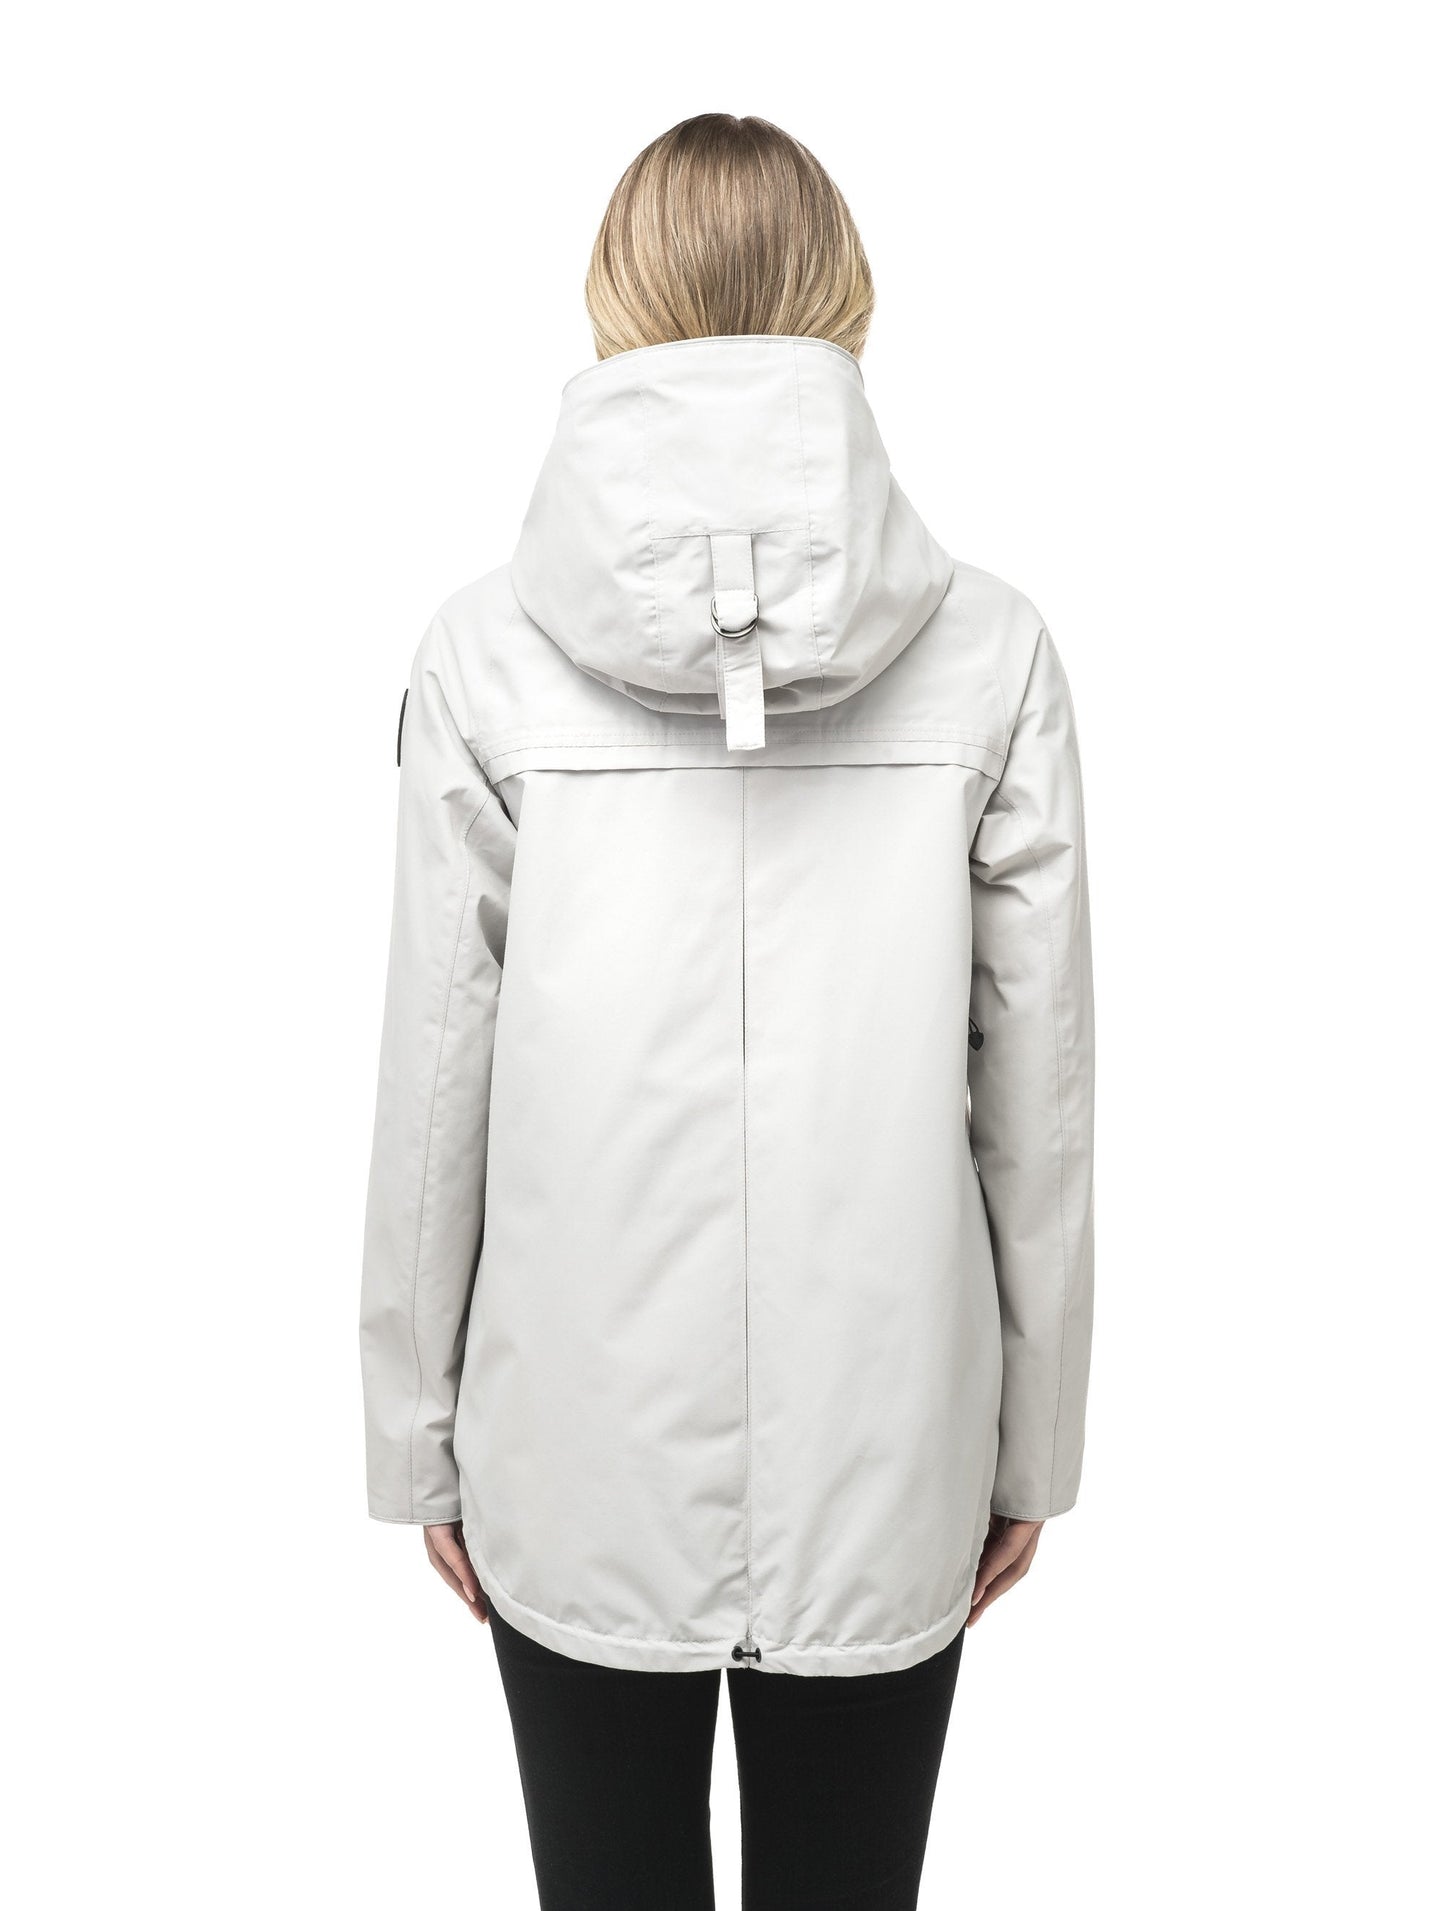 Women's hooded rain jacket with high low hem in Light Grey